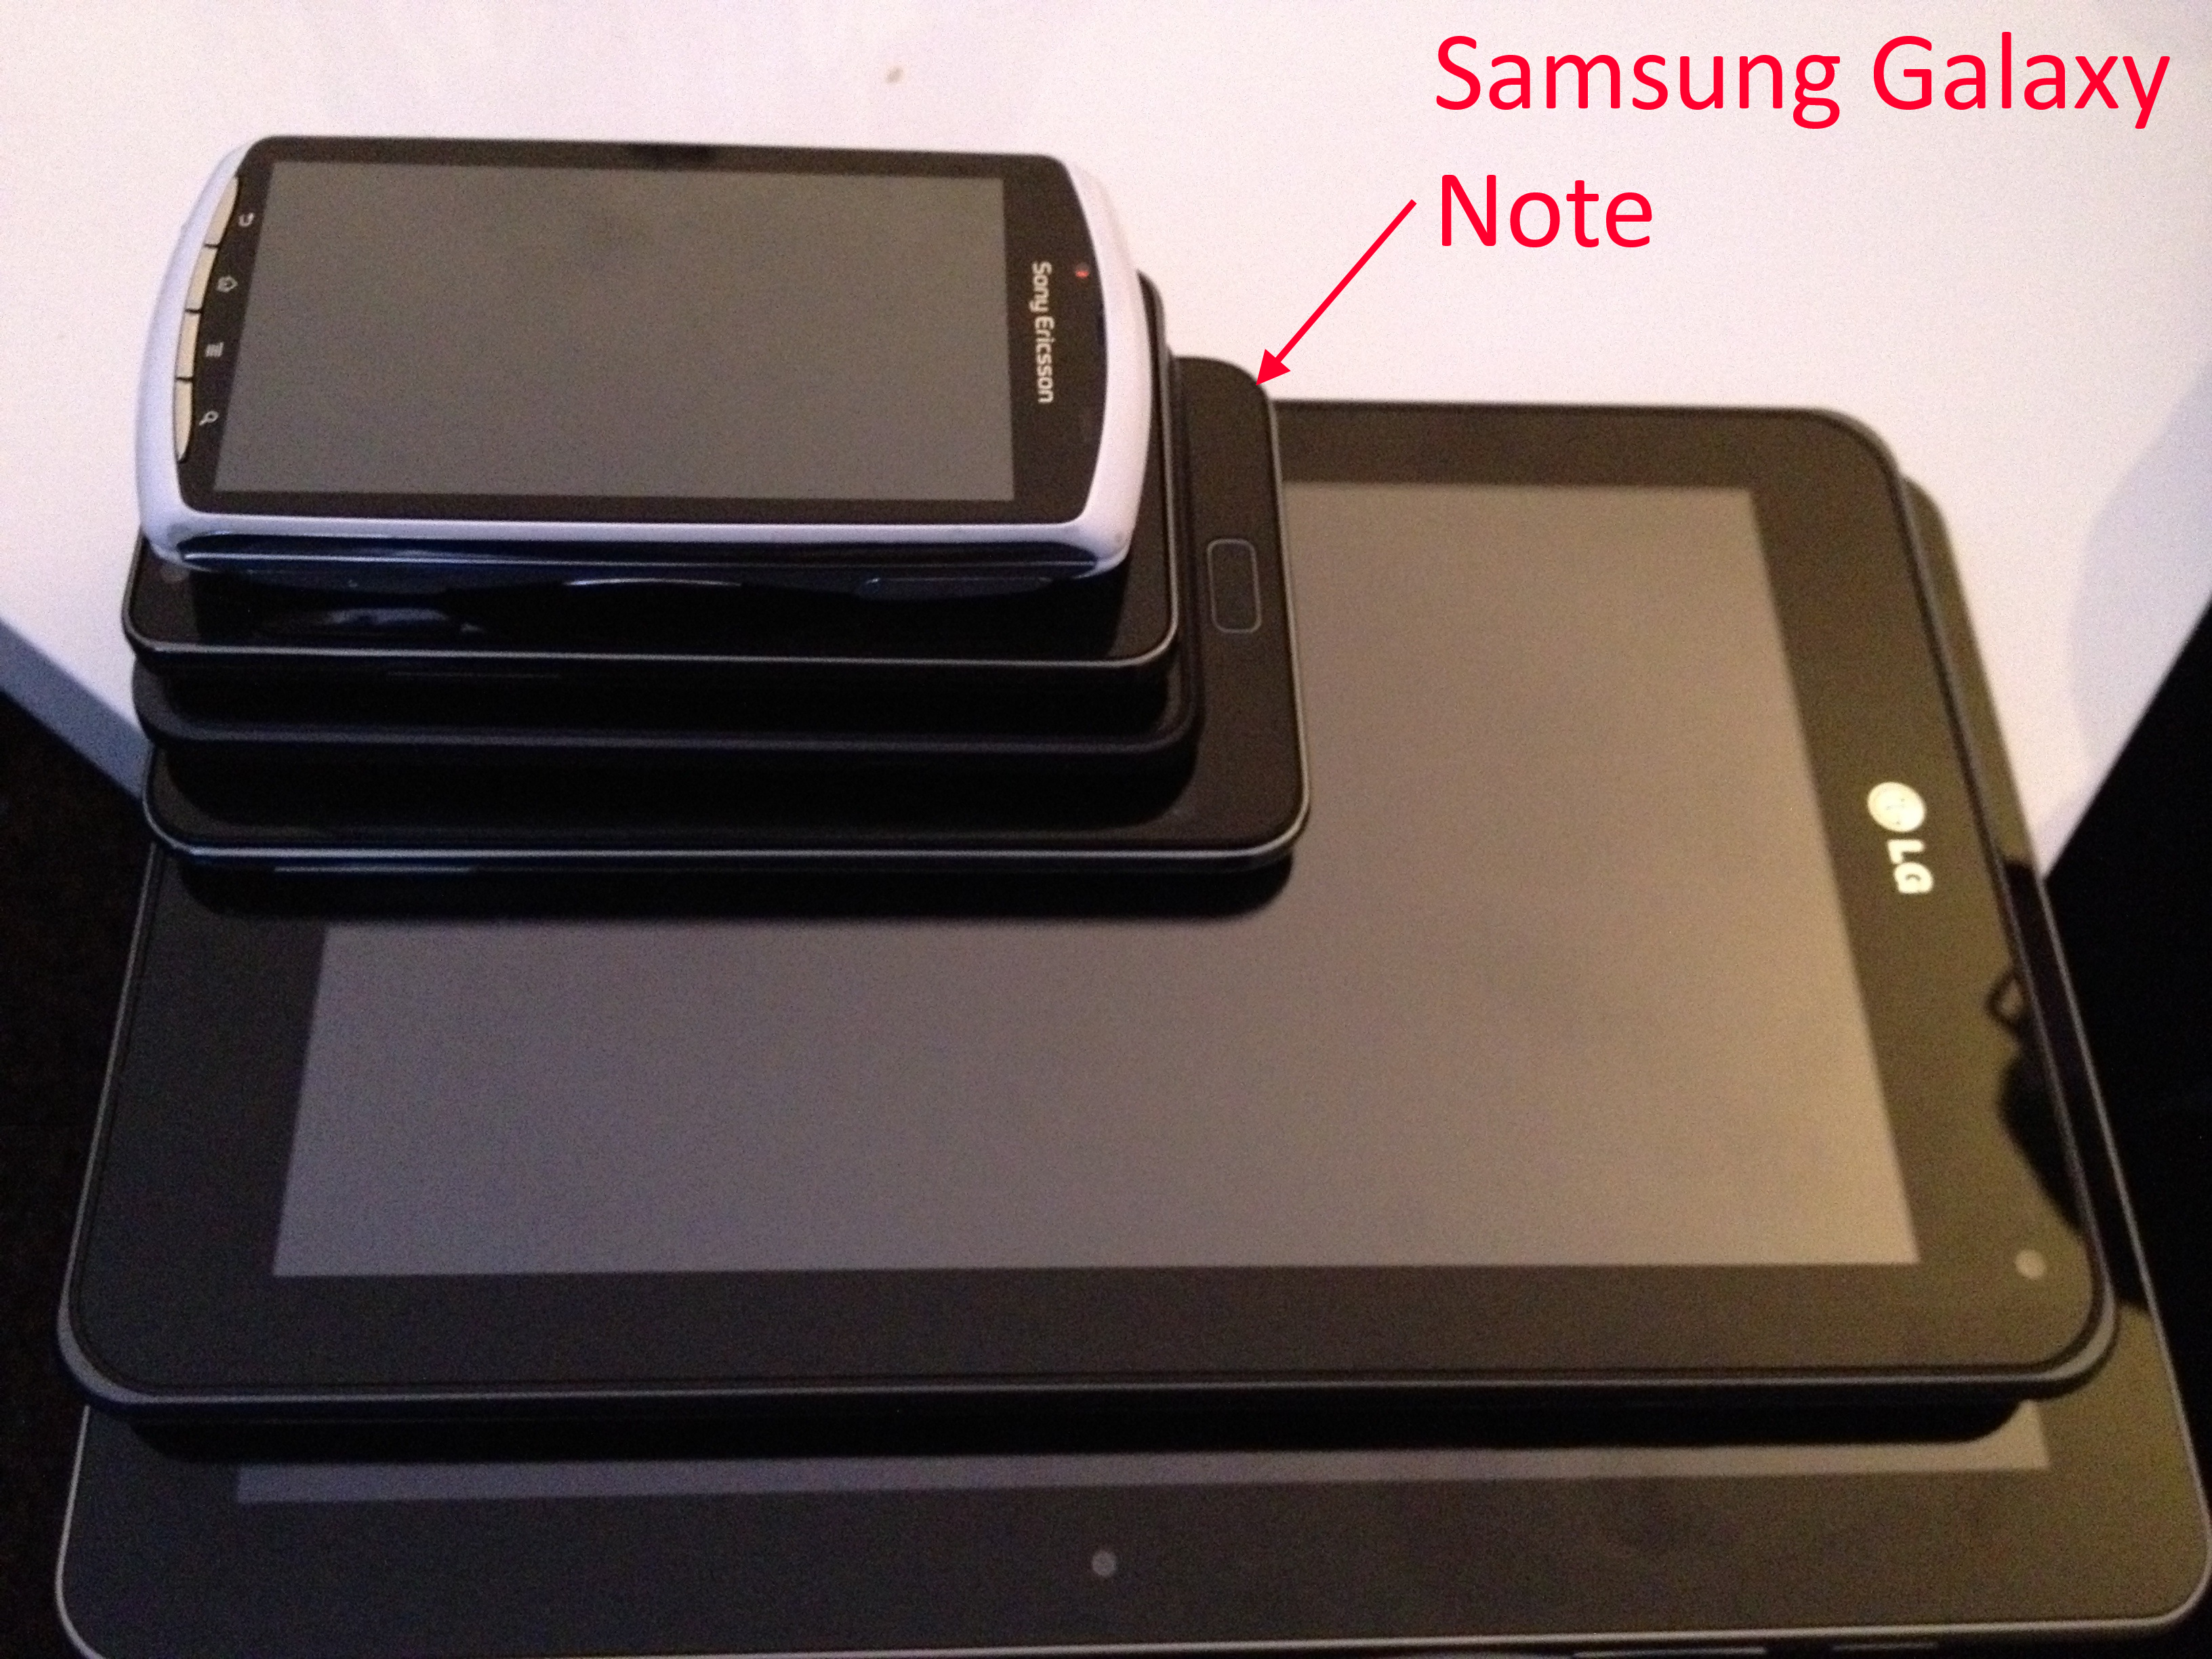 Samsung Galaxy Note 10.1 - Wikipedia